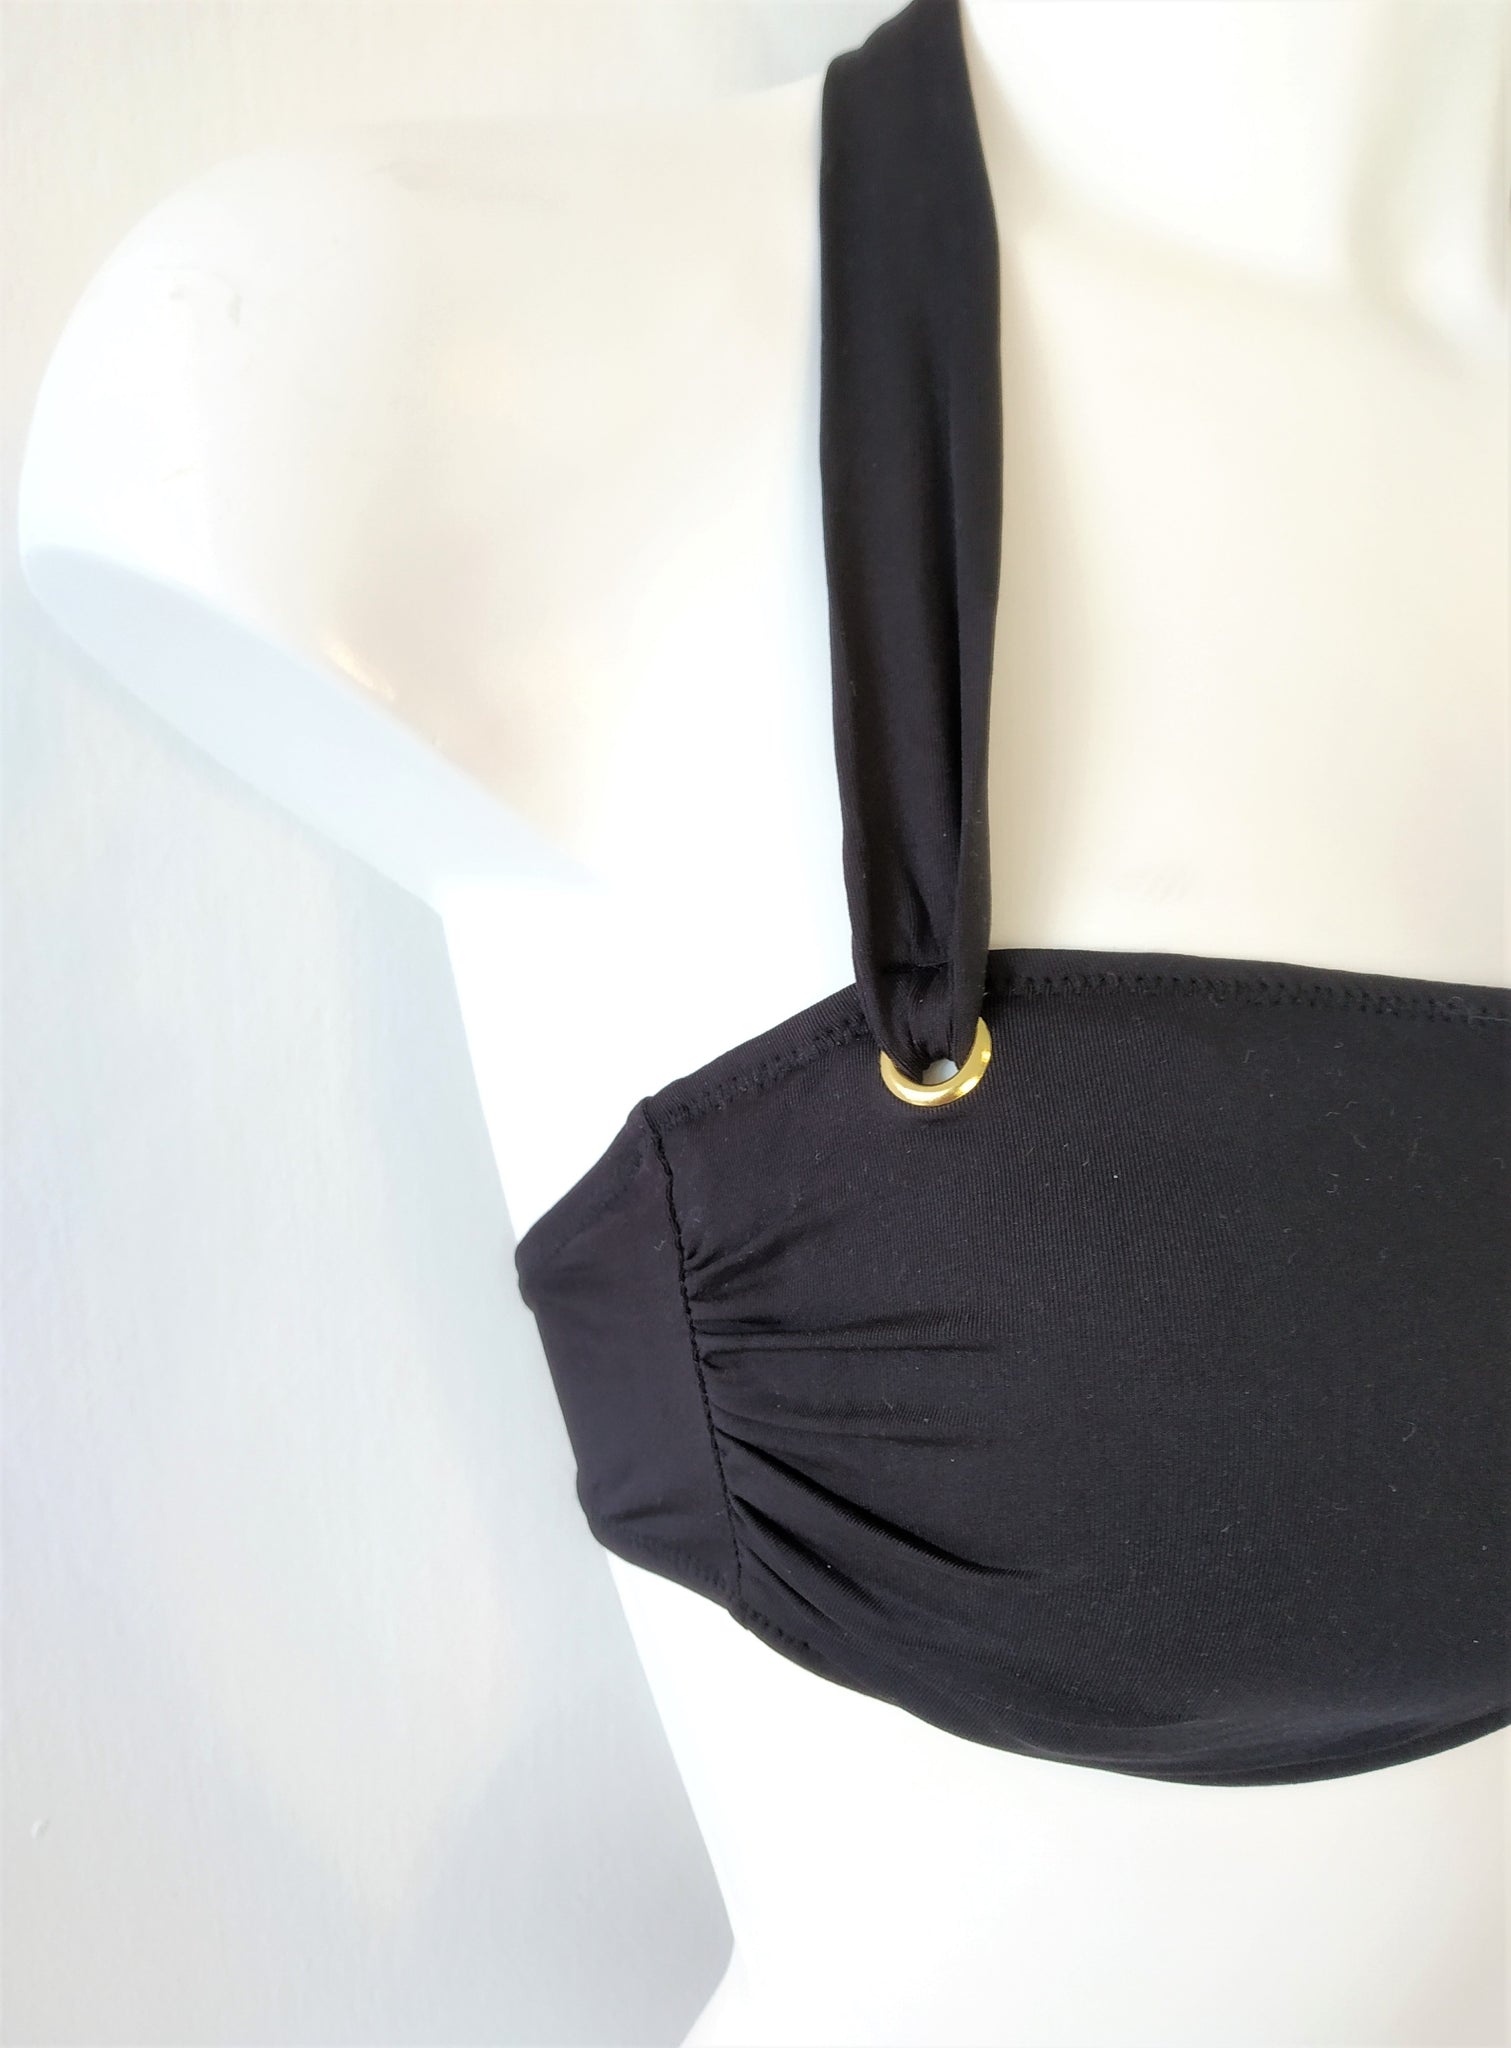 close detail of one side of a black bikini bandeau bra. bikinn.com